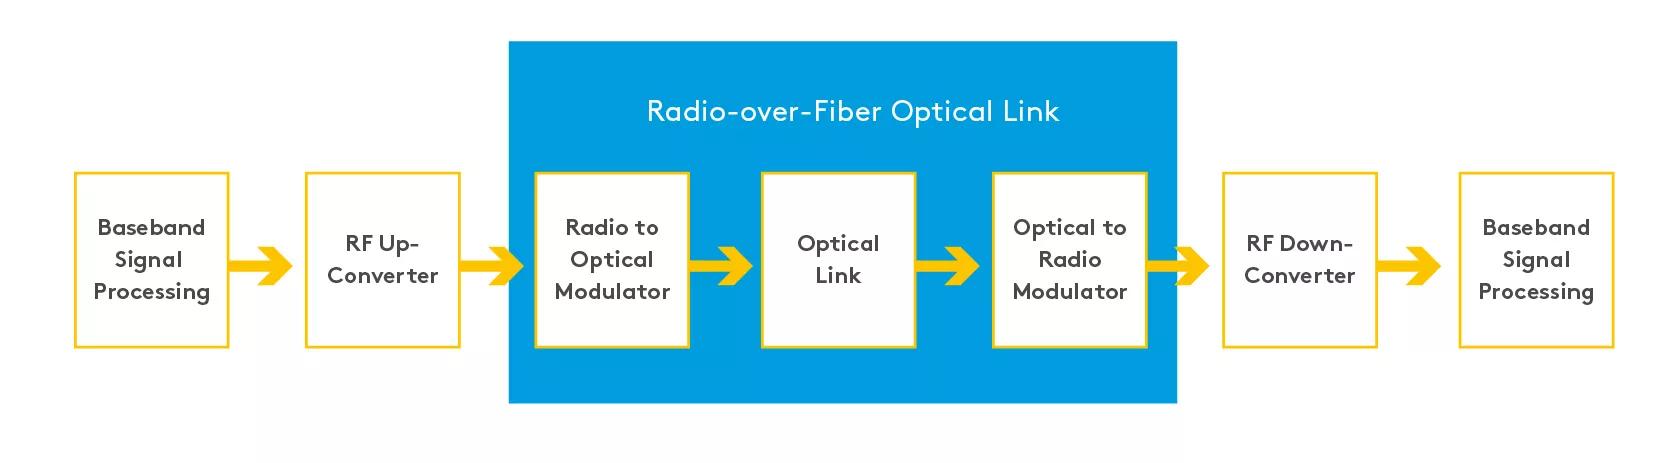 Radio over Fiber optical link